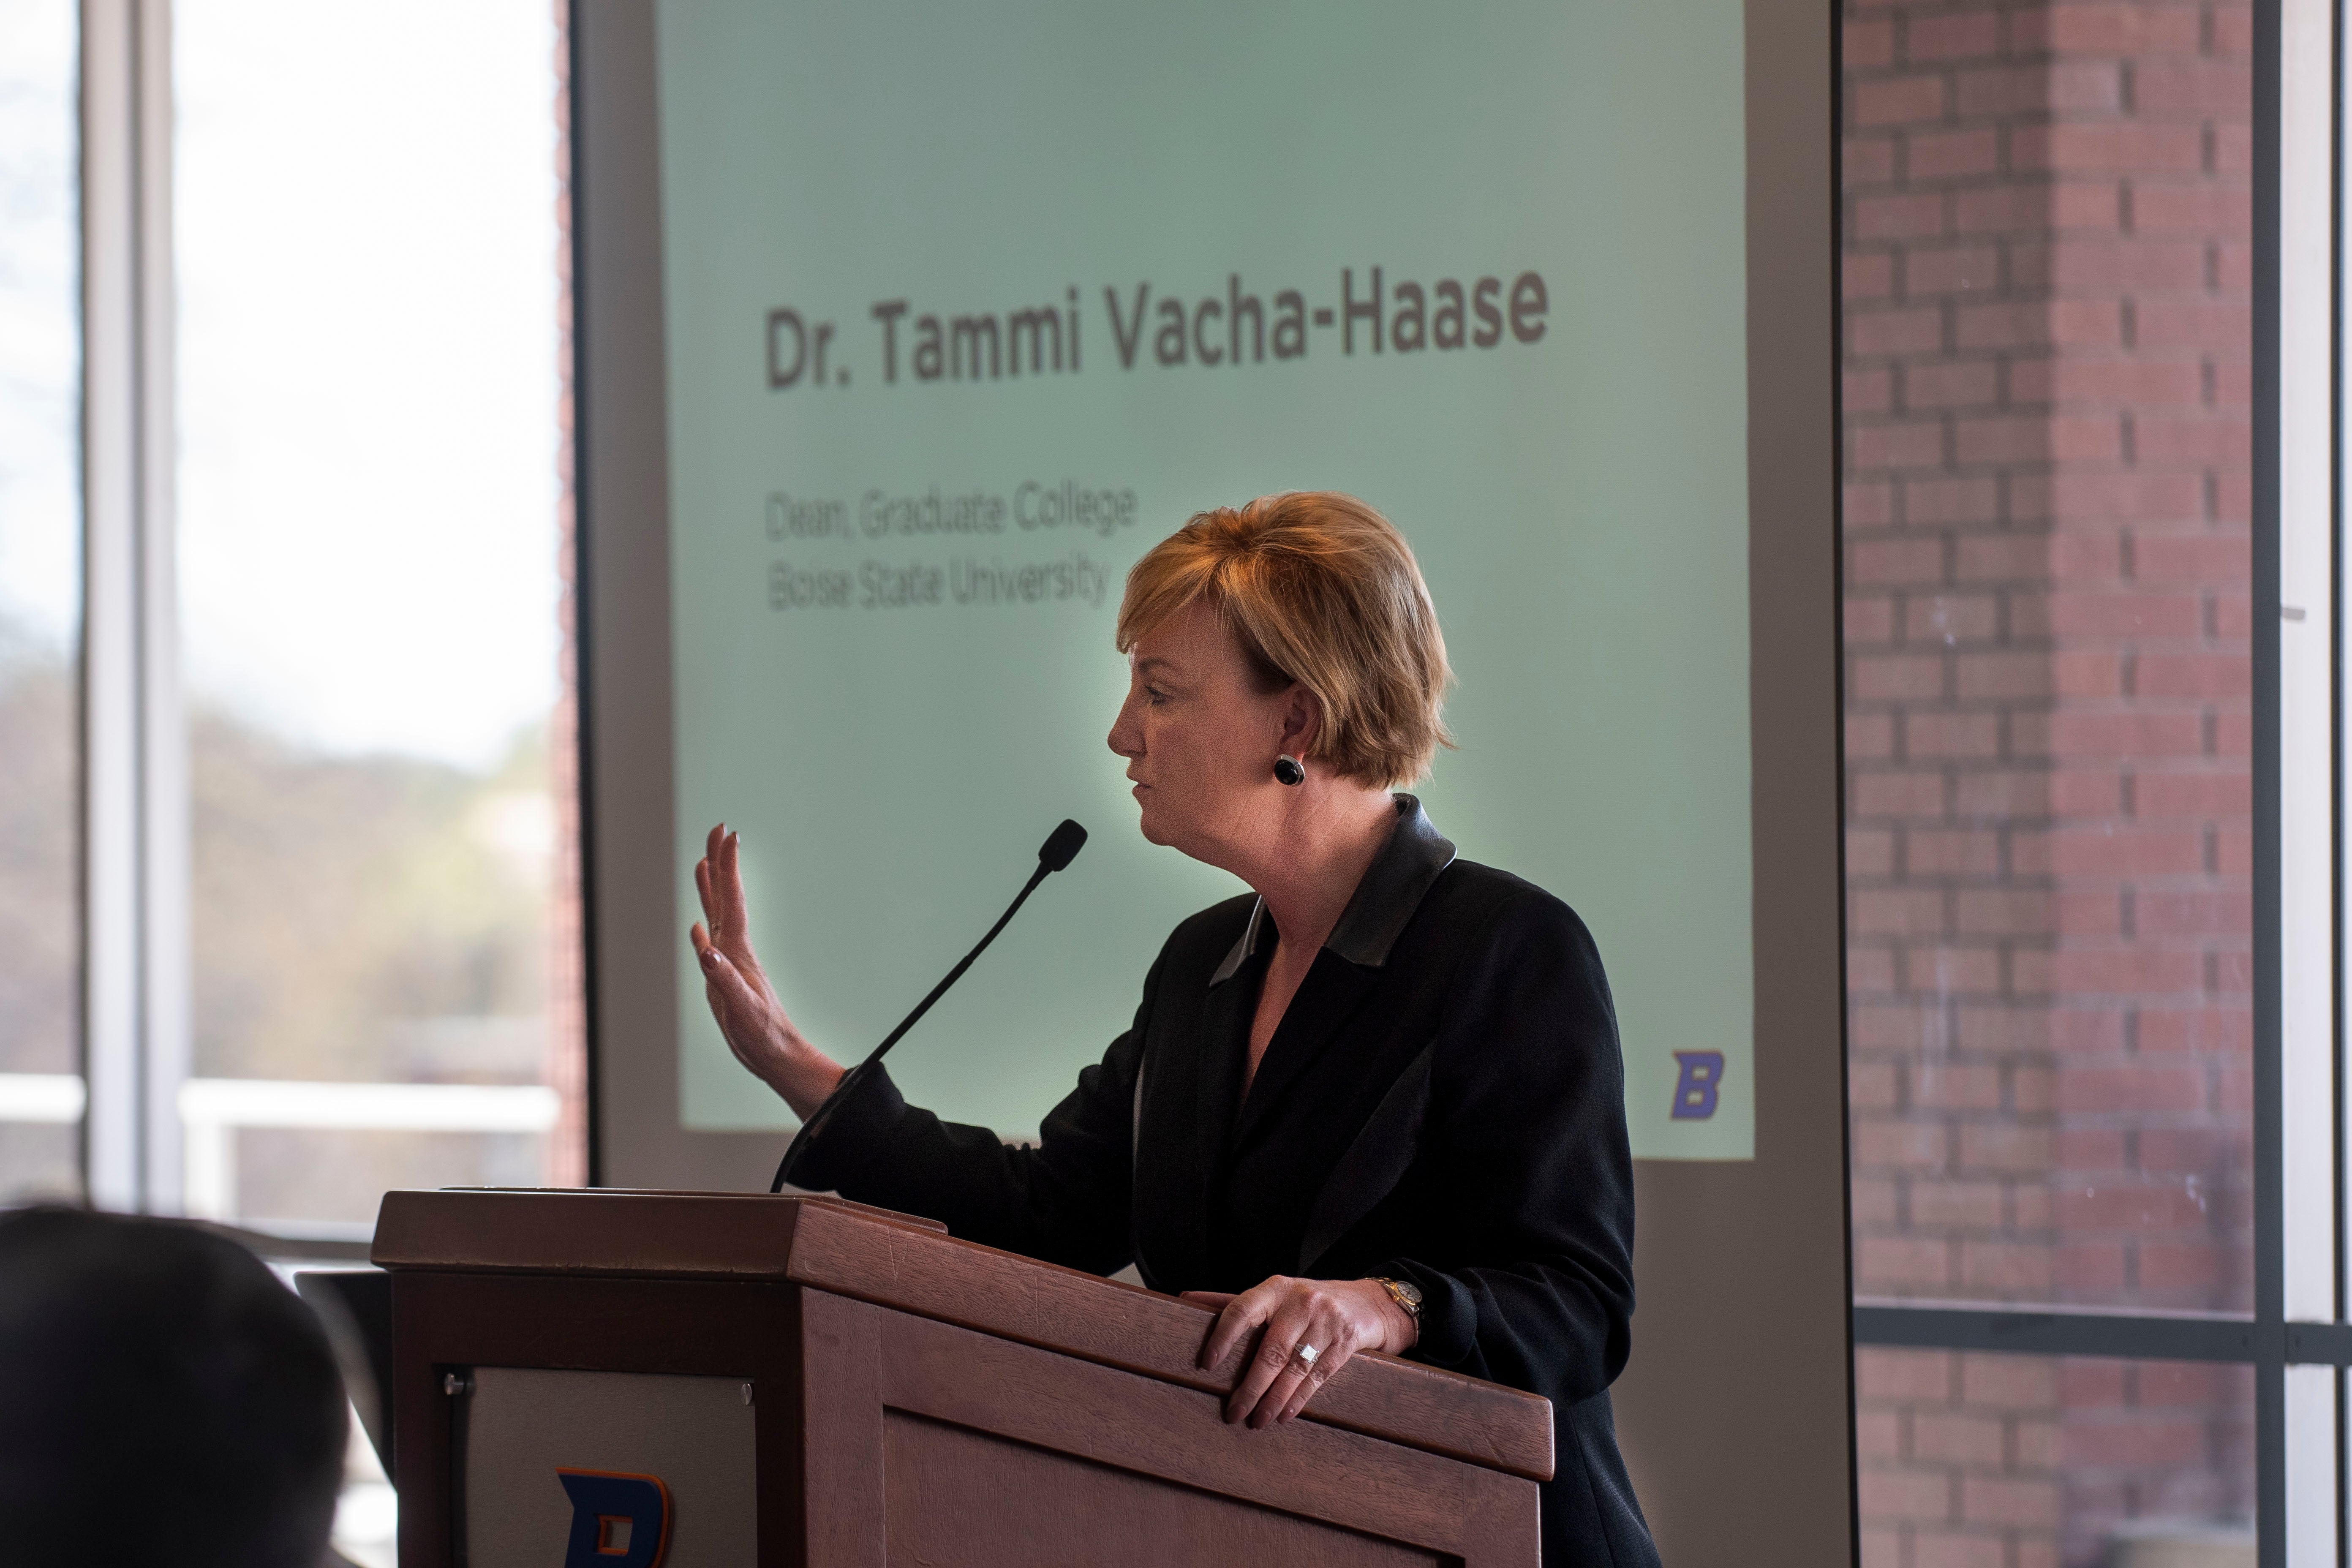 Dean Tammi Vacha-Haase welcoming guests at podium 